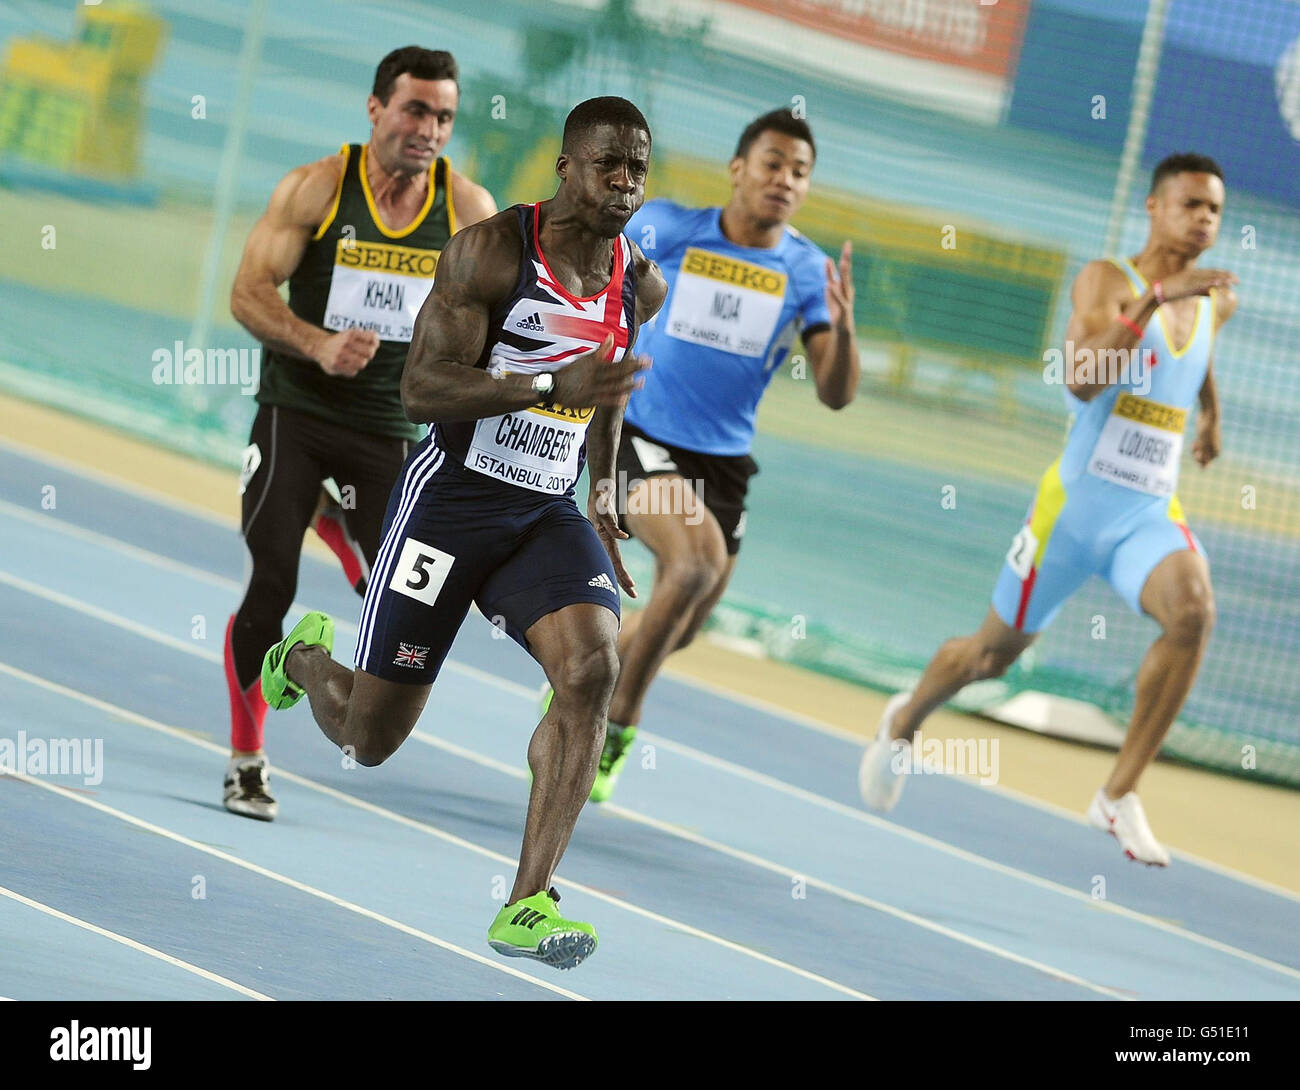 Atletica - IAAF Campionati mondiali Indoor - Giorno 1 - Atakoy atletica Arena Foto Stock